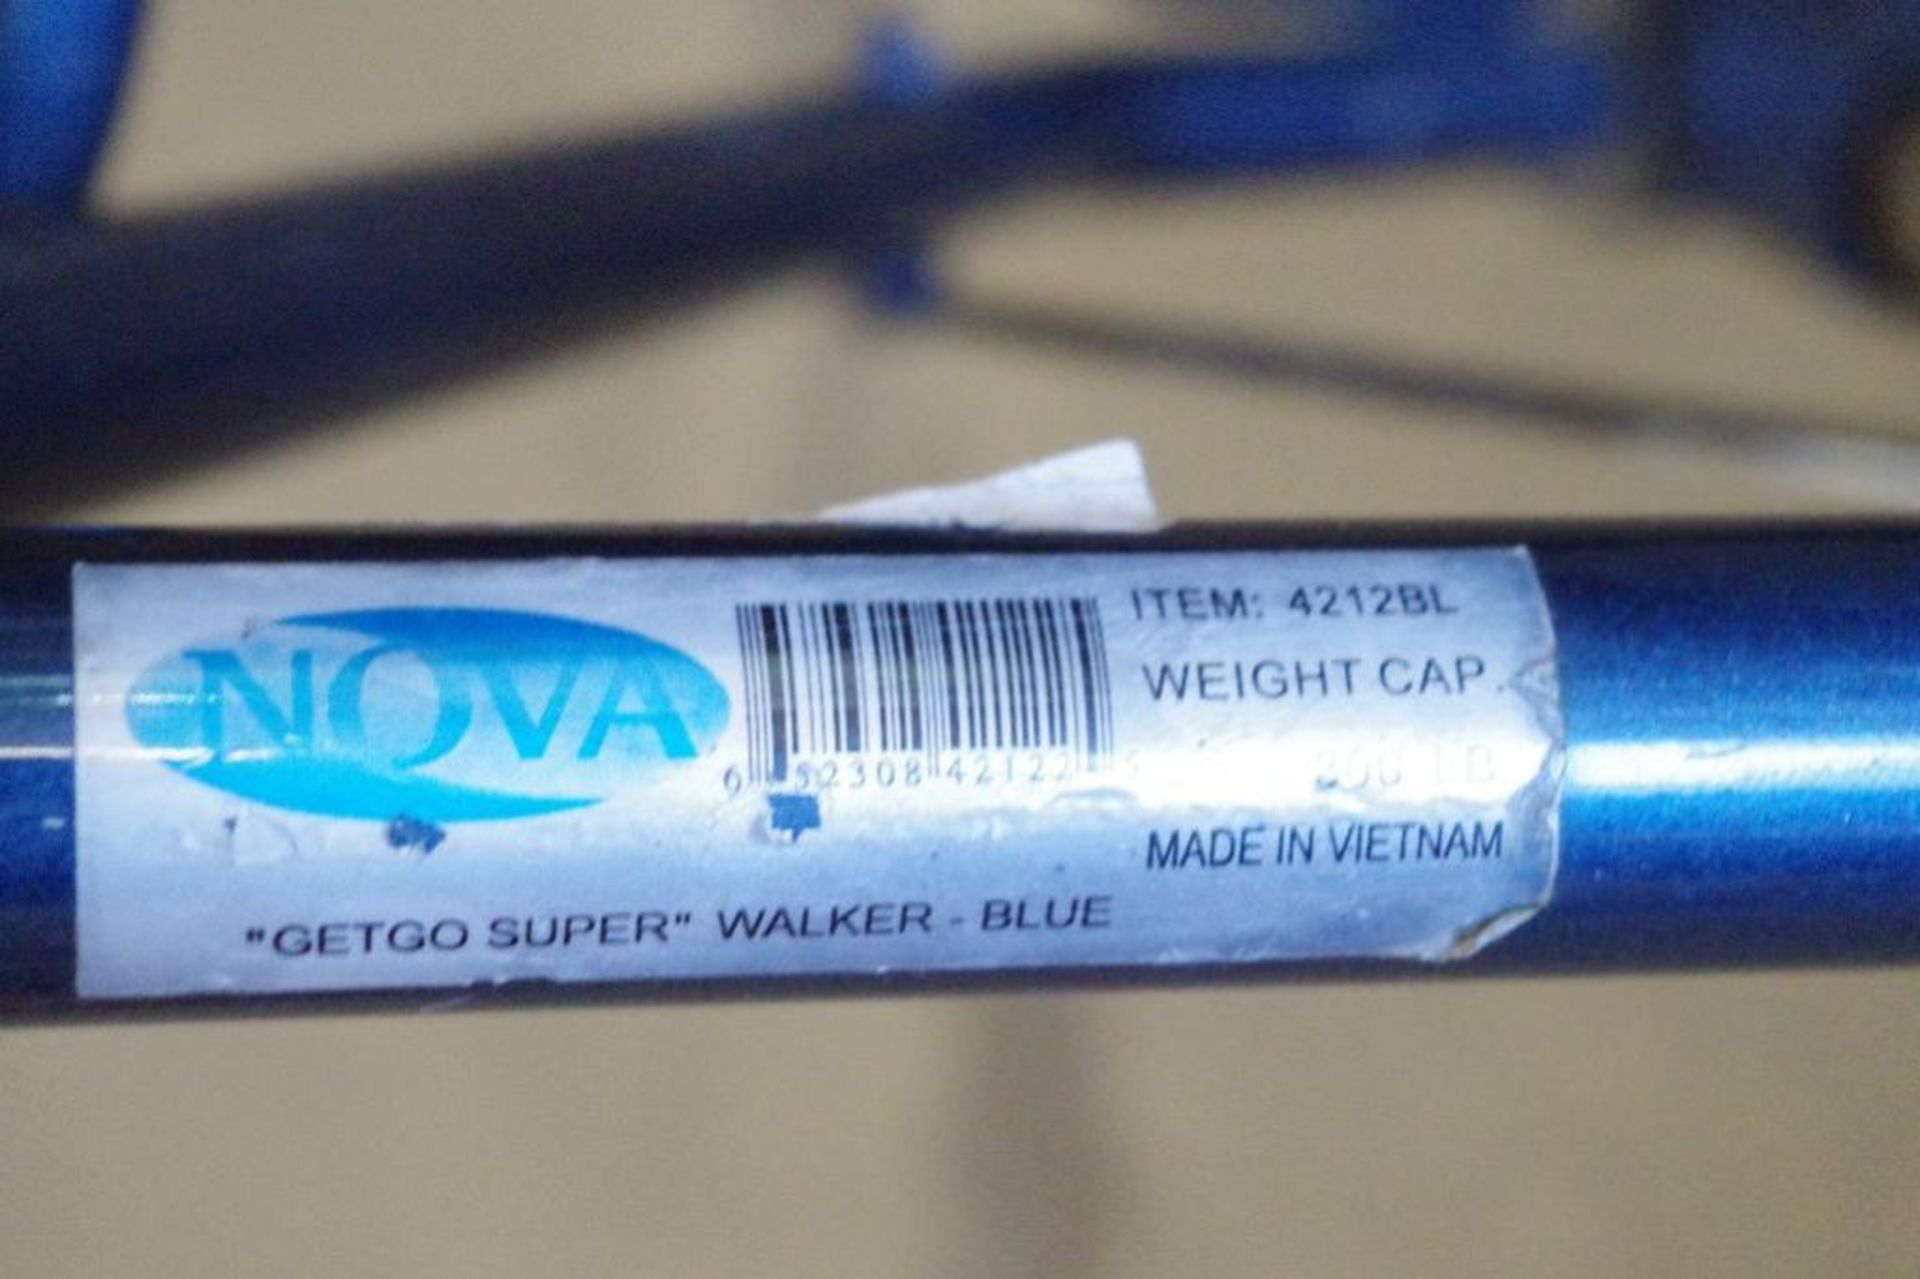 NOVA Blue "Getgo Super" 4-Wheeled Walker M/N 4212BL (Handles may need cleaned) - Image 2 of 2